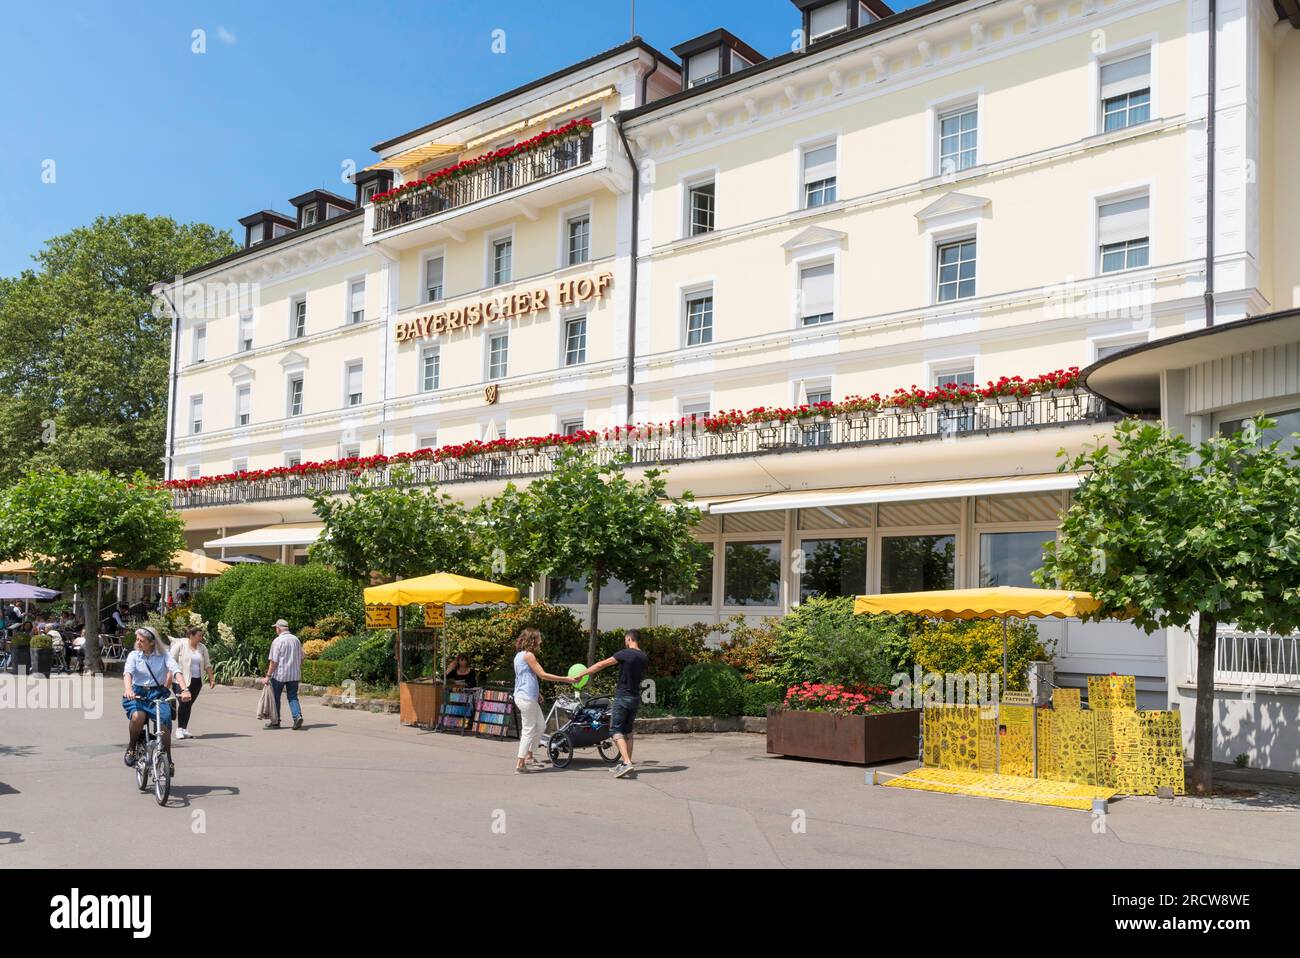 People passing the Bayerischer Hof Hotel in Lindau, Bavaria, Germany Stock Photo